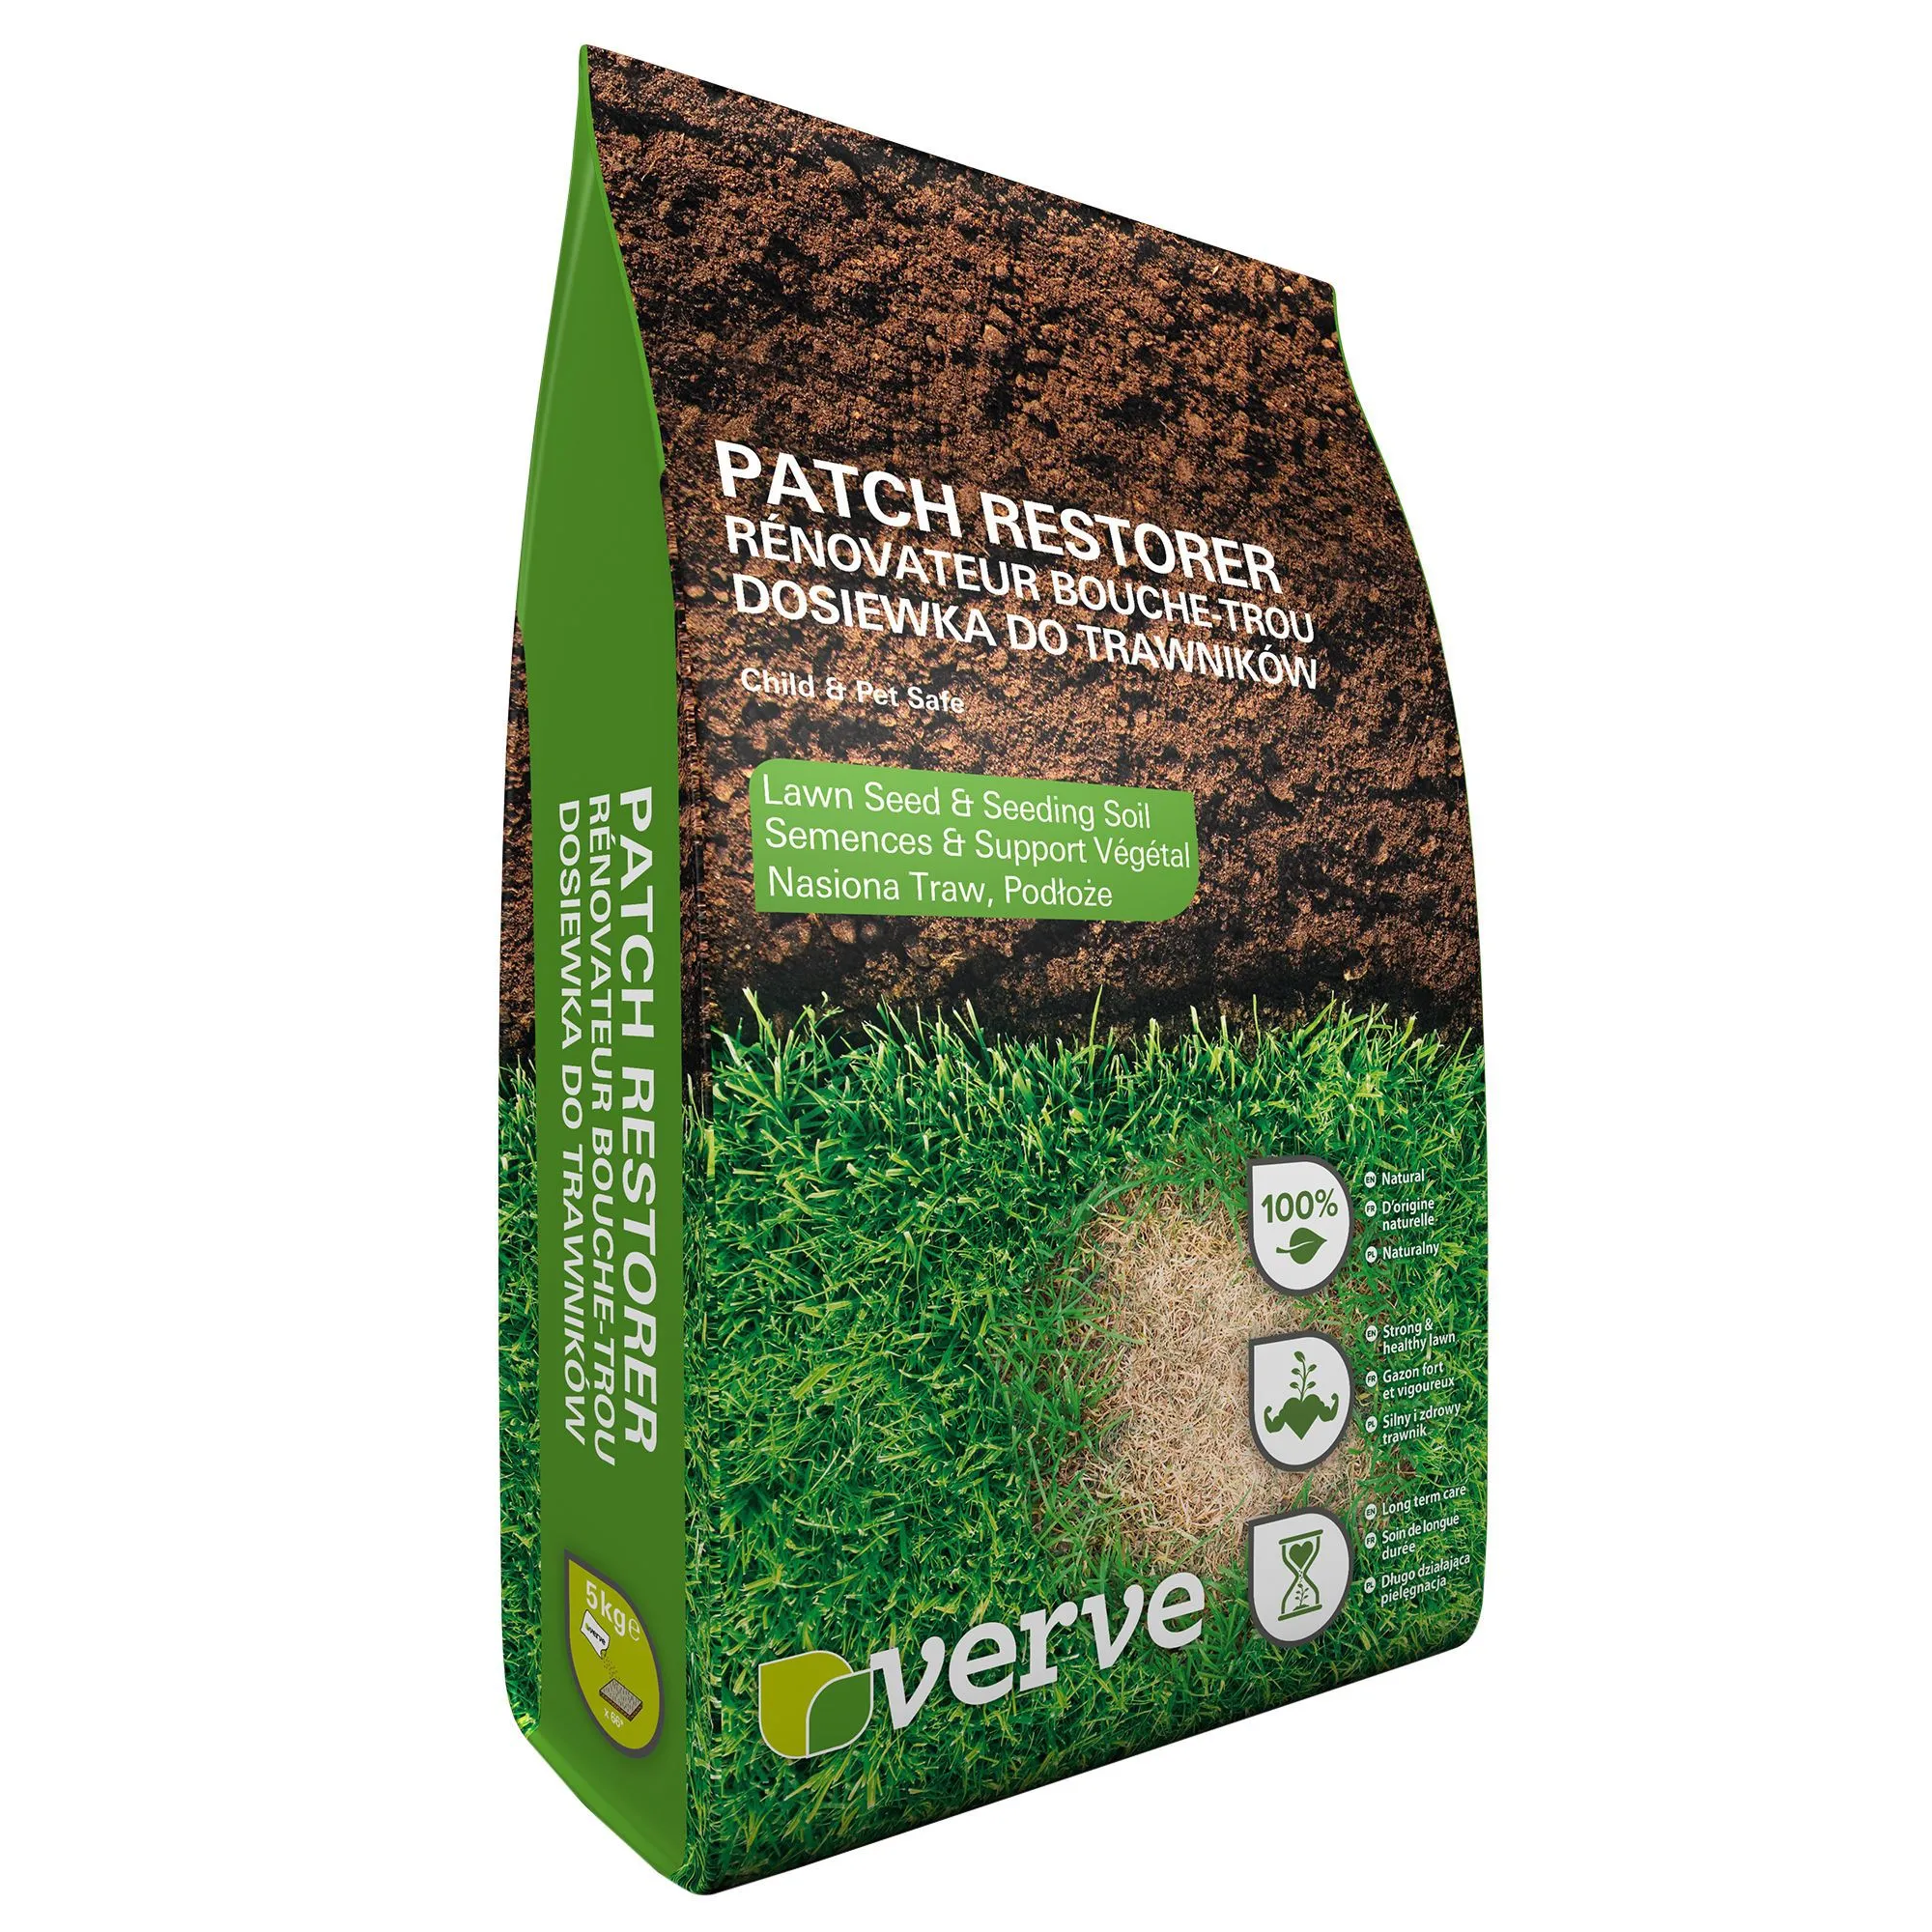 Verve Organic Patch repairer 5kg